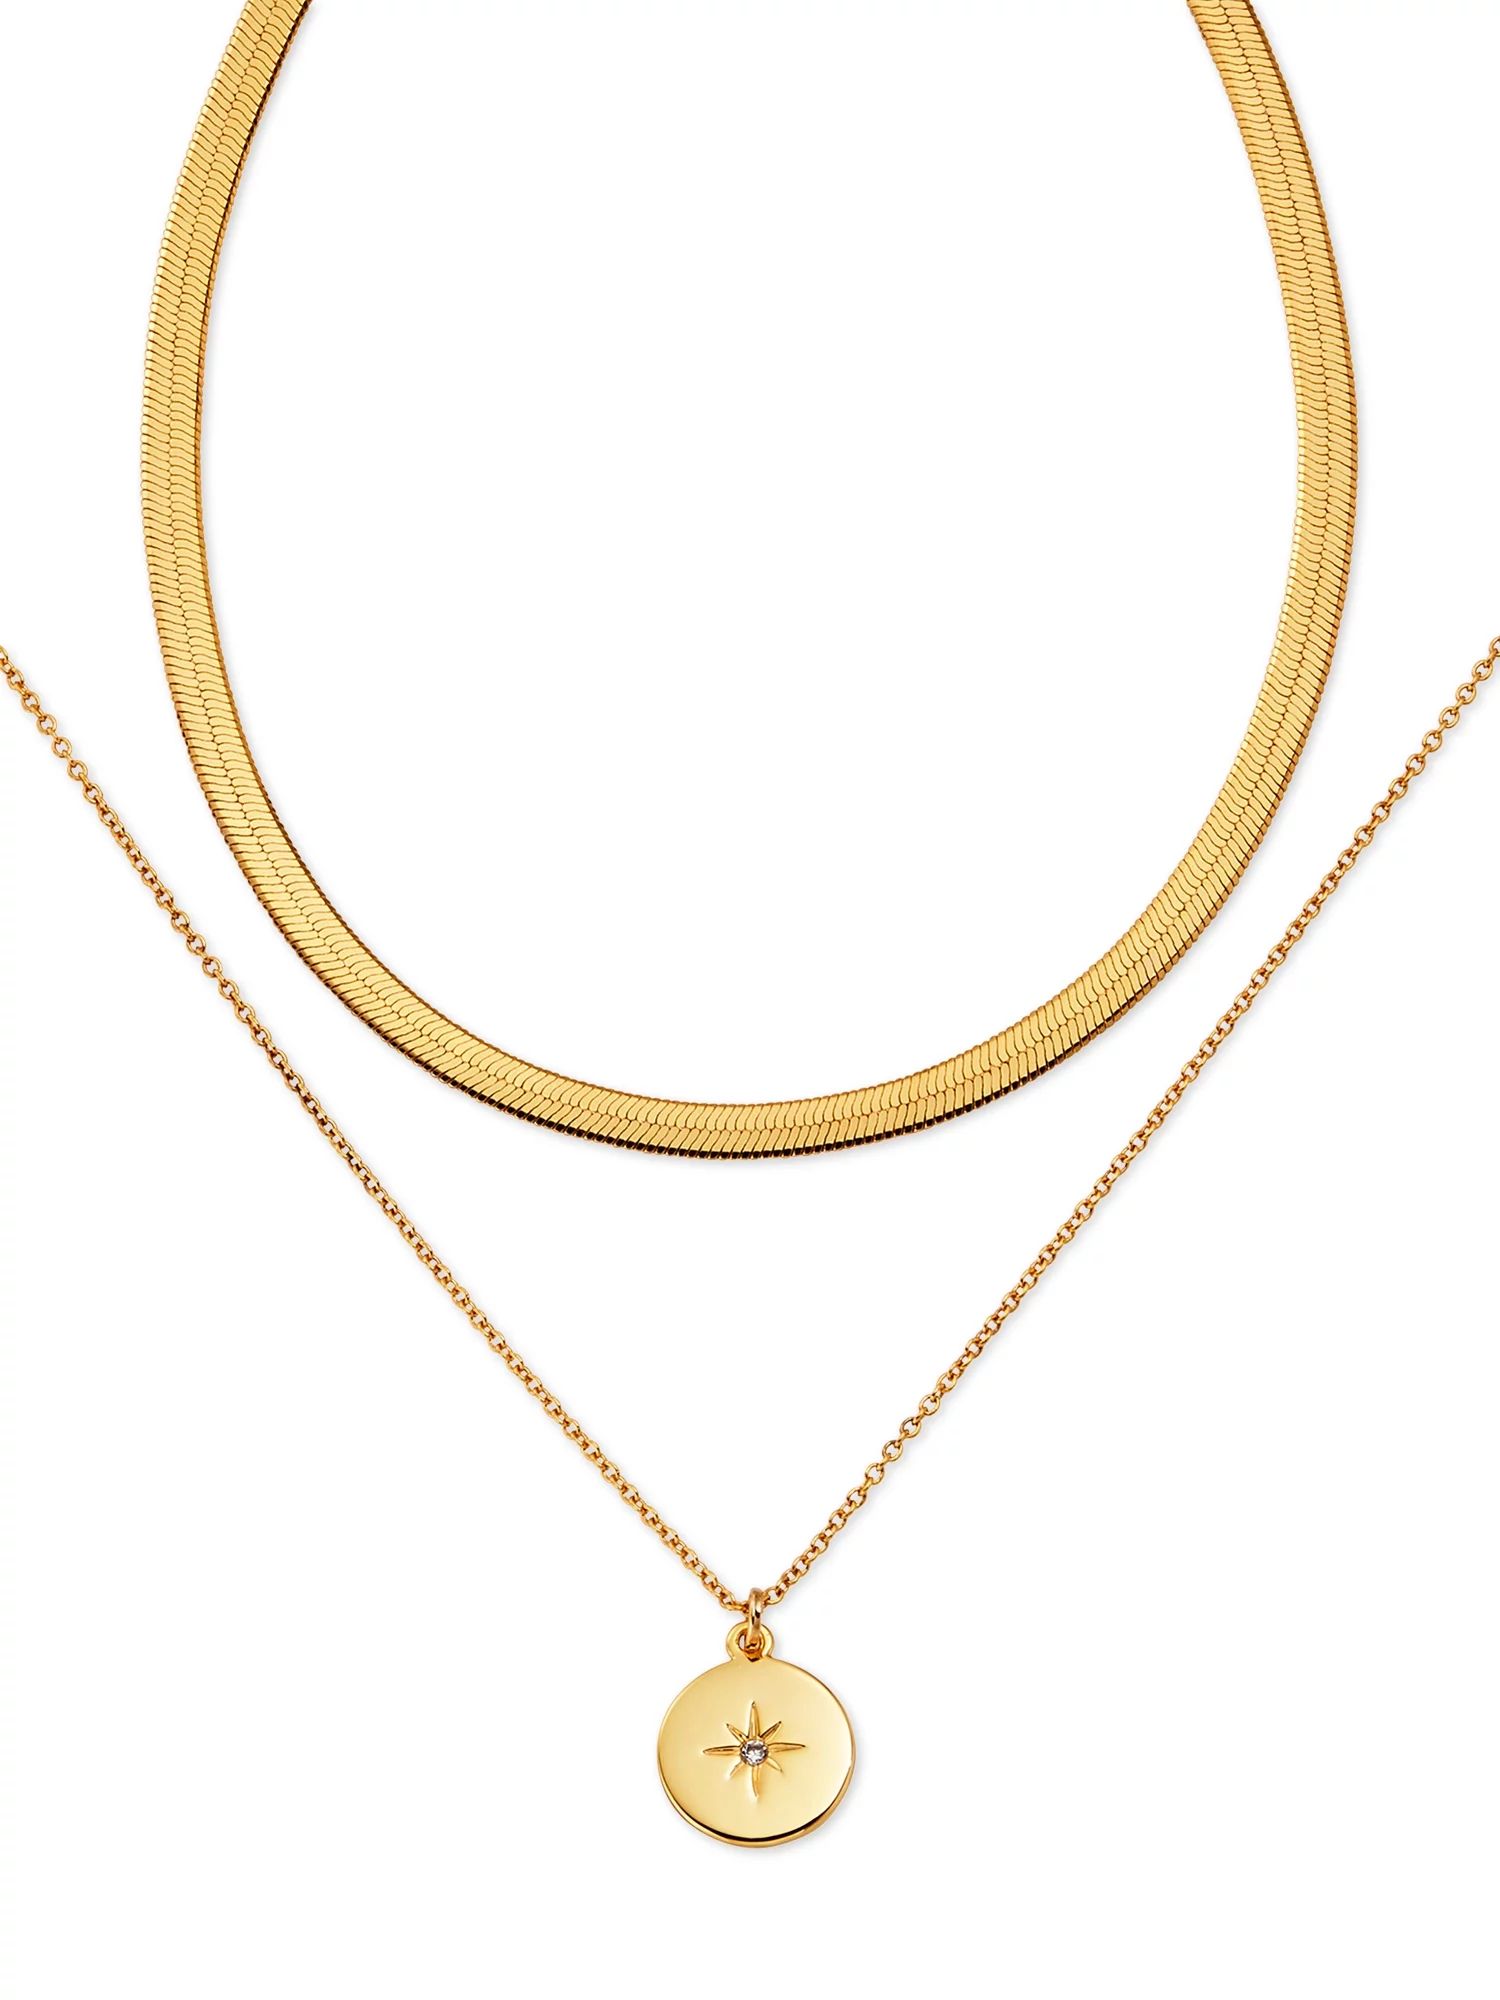 Scoop Brass Yellow Gold-Plated Layered Starburst Necklace, 16.5" + 3" Extender | Walmart (US)